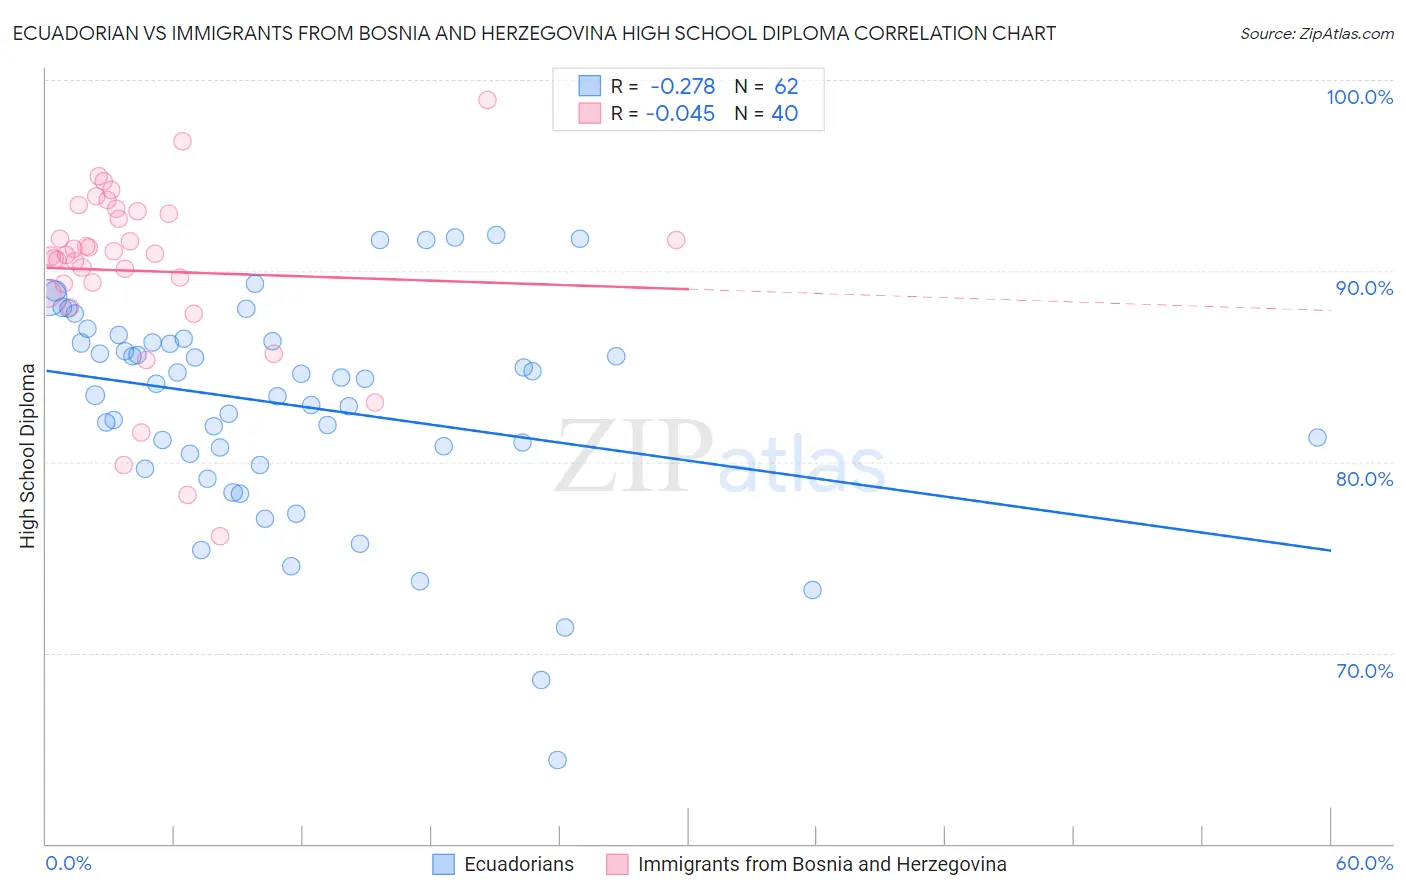 Ecuadorian vs Immigrants from Bosnia and Herzegovina High School Diploma